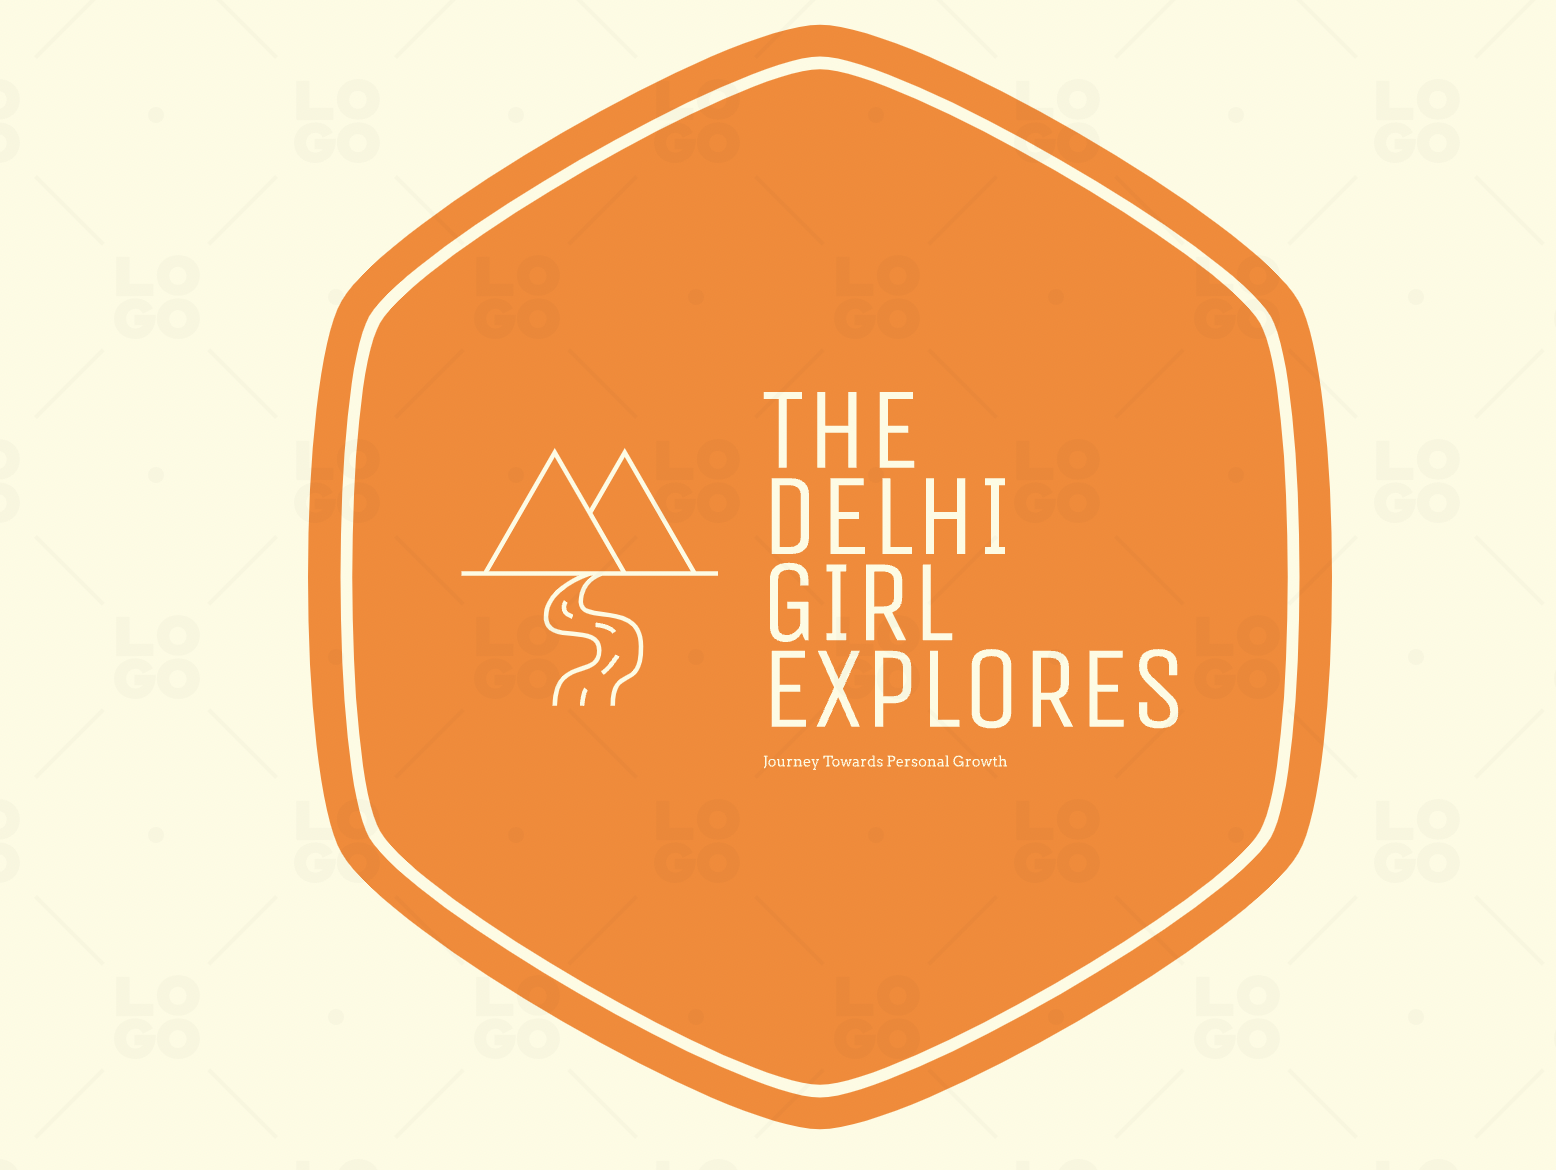 The Delhi Girl Explores